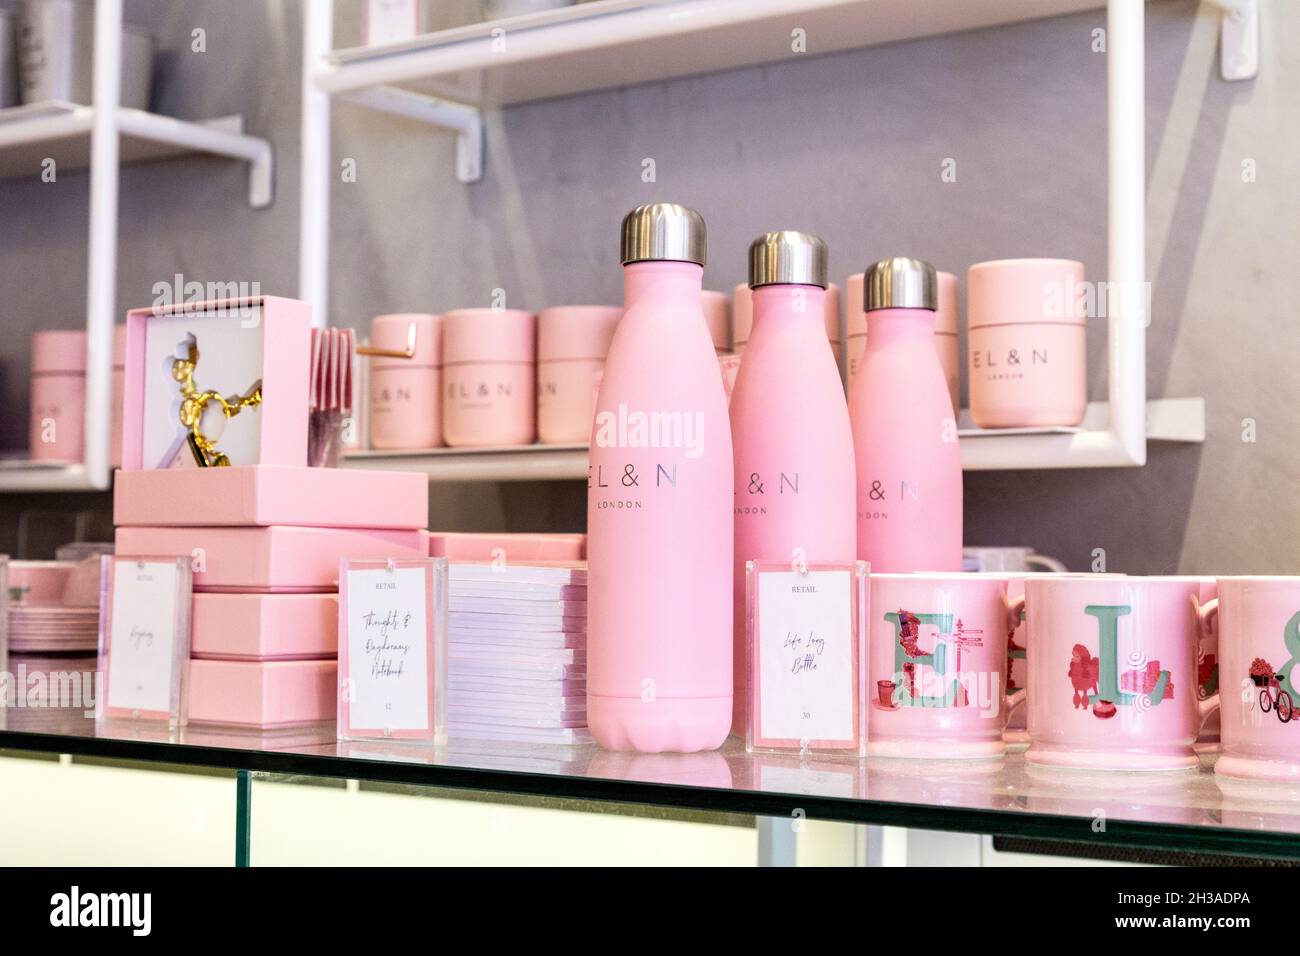 Pink merchandise at EL&N Cafe Brompton Road, London, UK Stock Photo